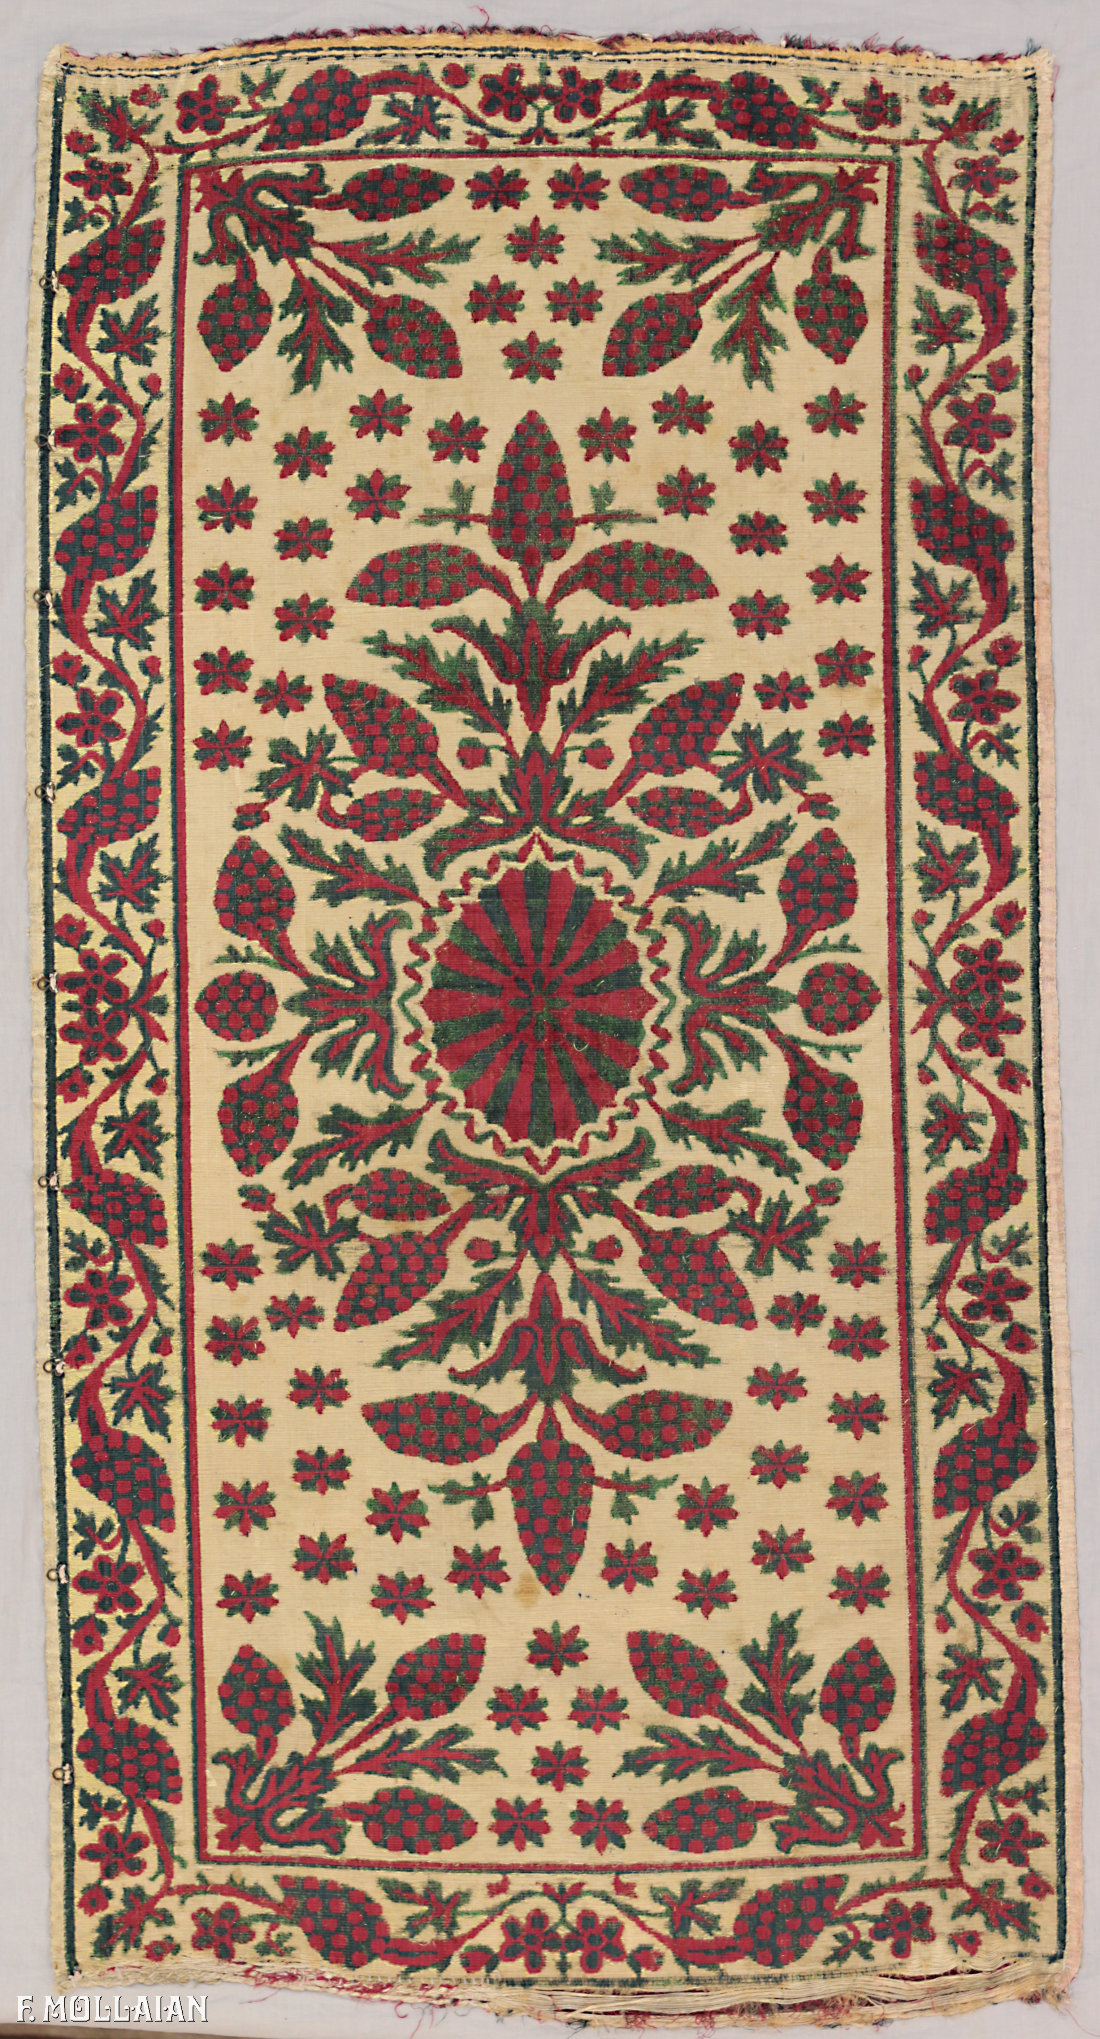 Tessuto Antico Ottomano (Velluto) n°:68495009